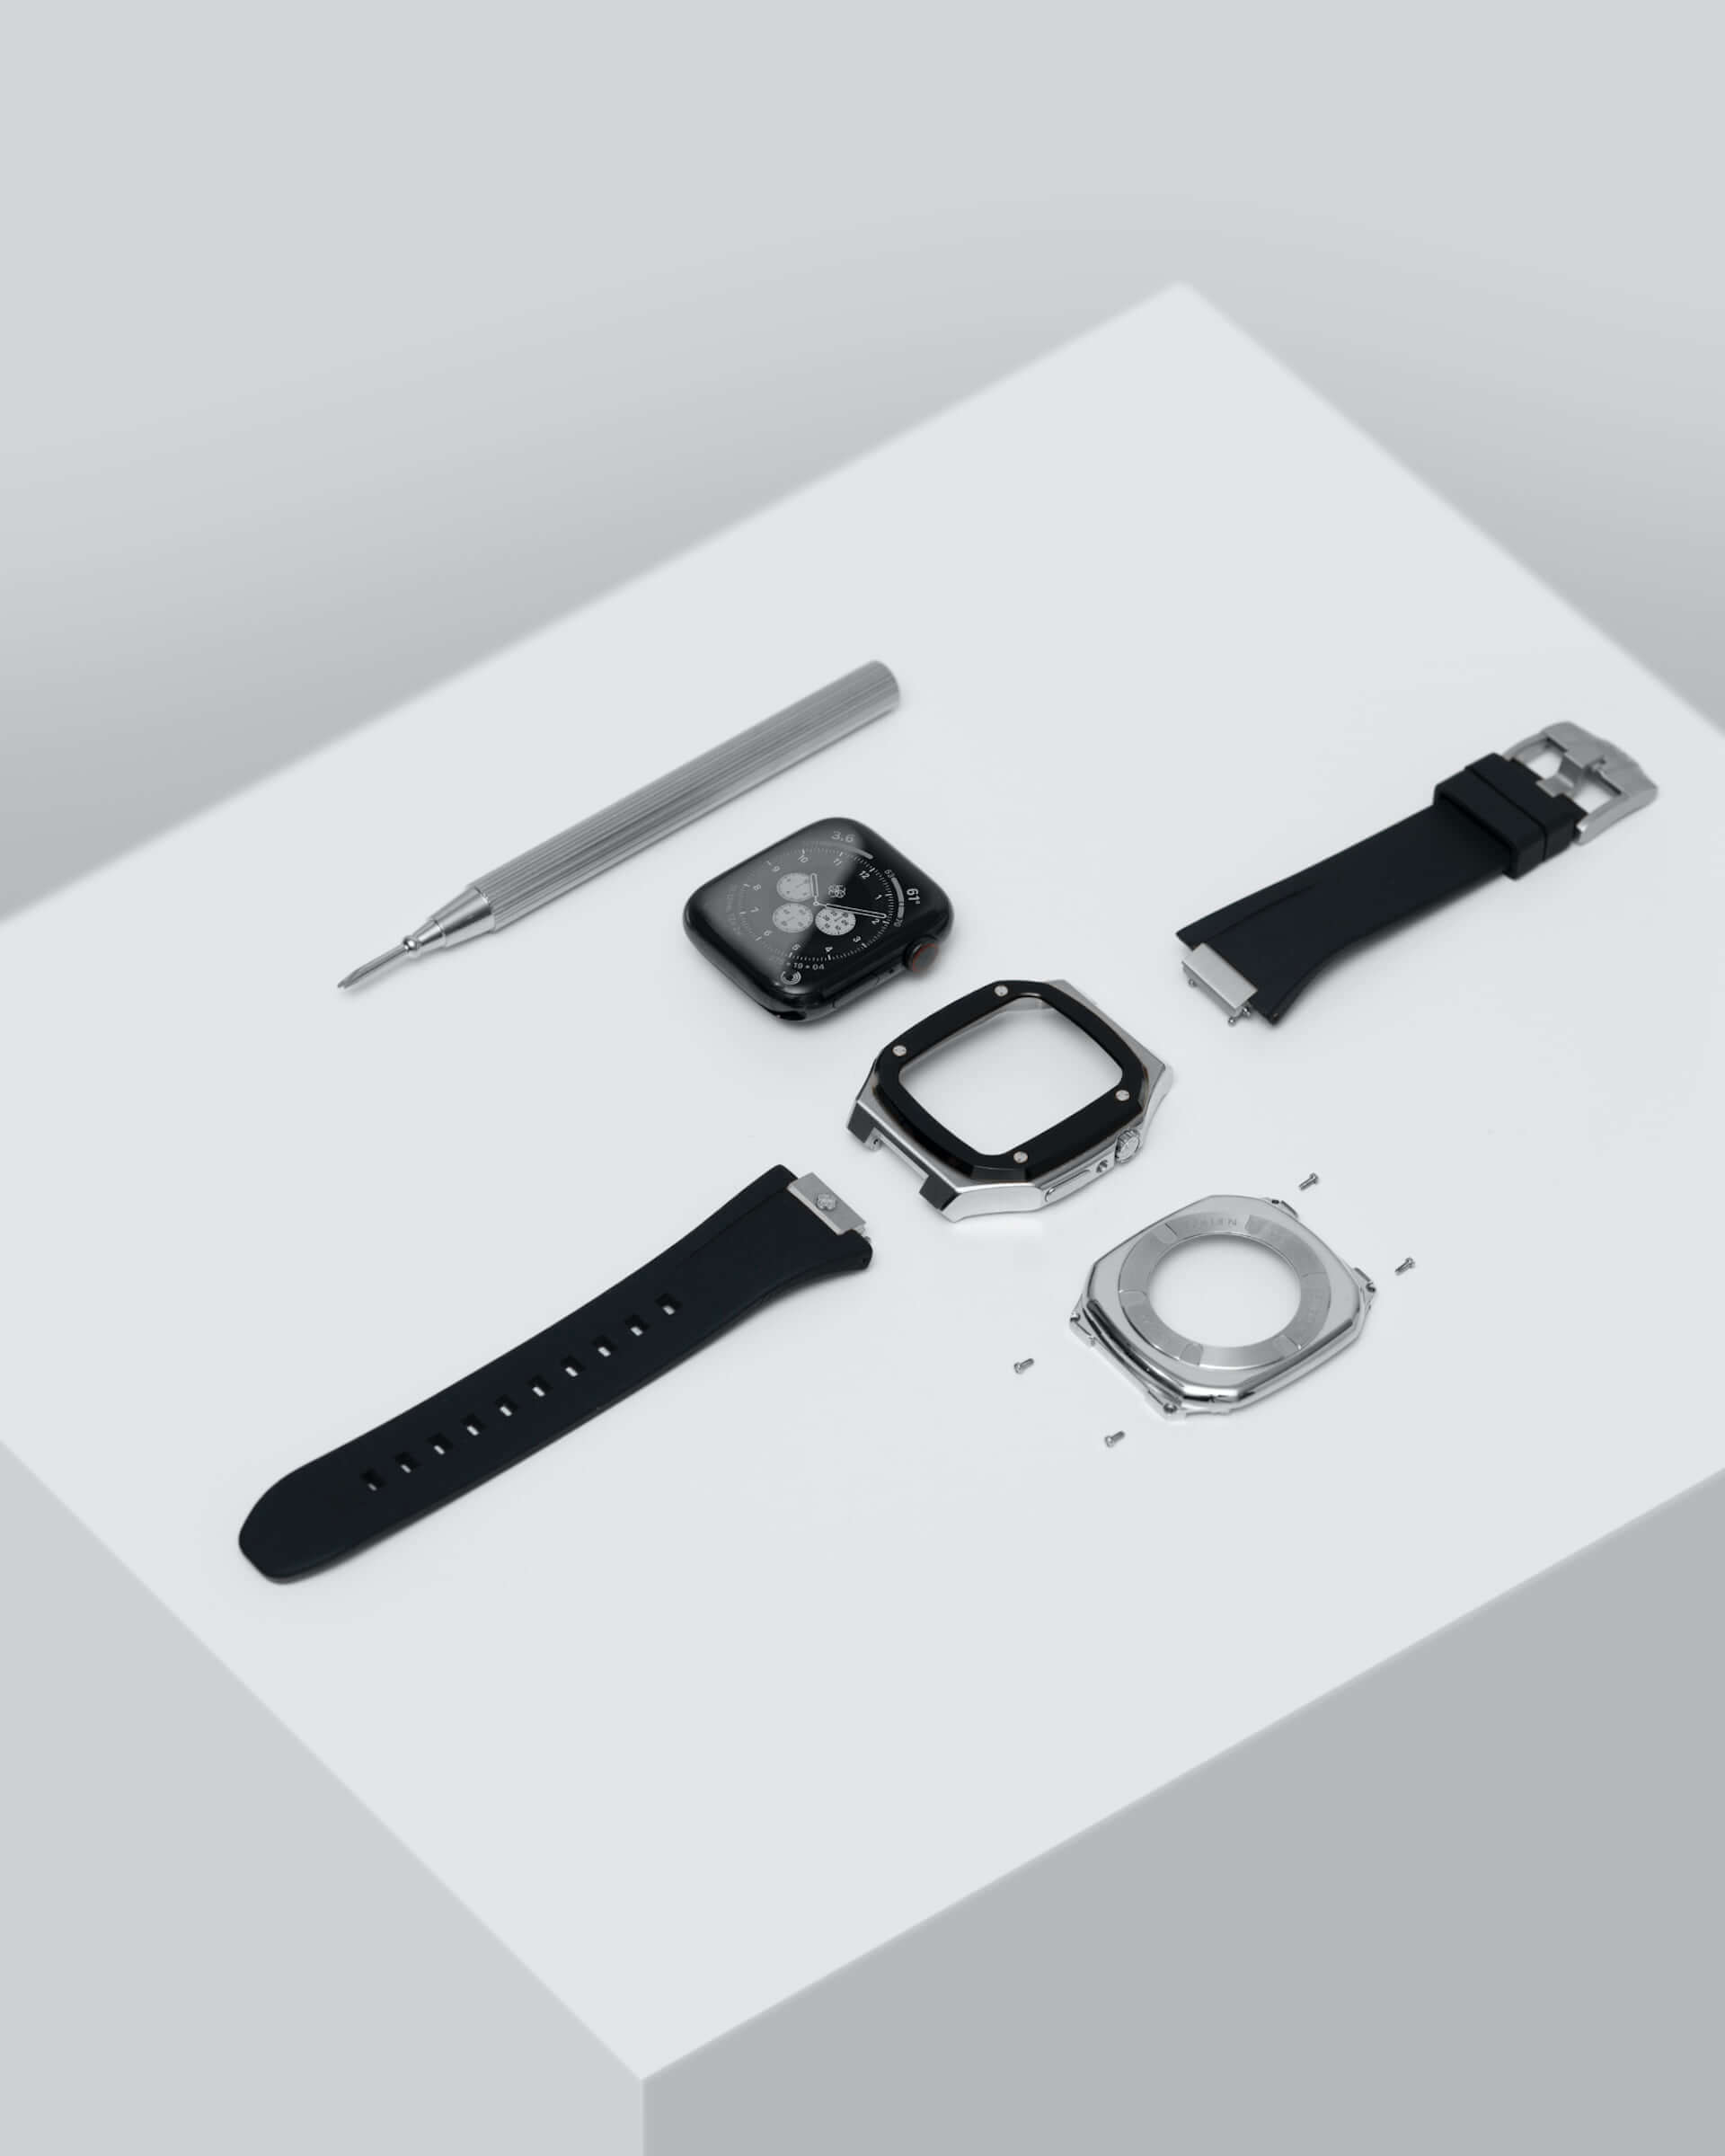 「GOLDEN CONCEPT」の高級Apple Watchケースにレザーストラップモデルが登場！世界999個限定で予約受付スタート tech201116_golden-concept_18-1920x2400